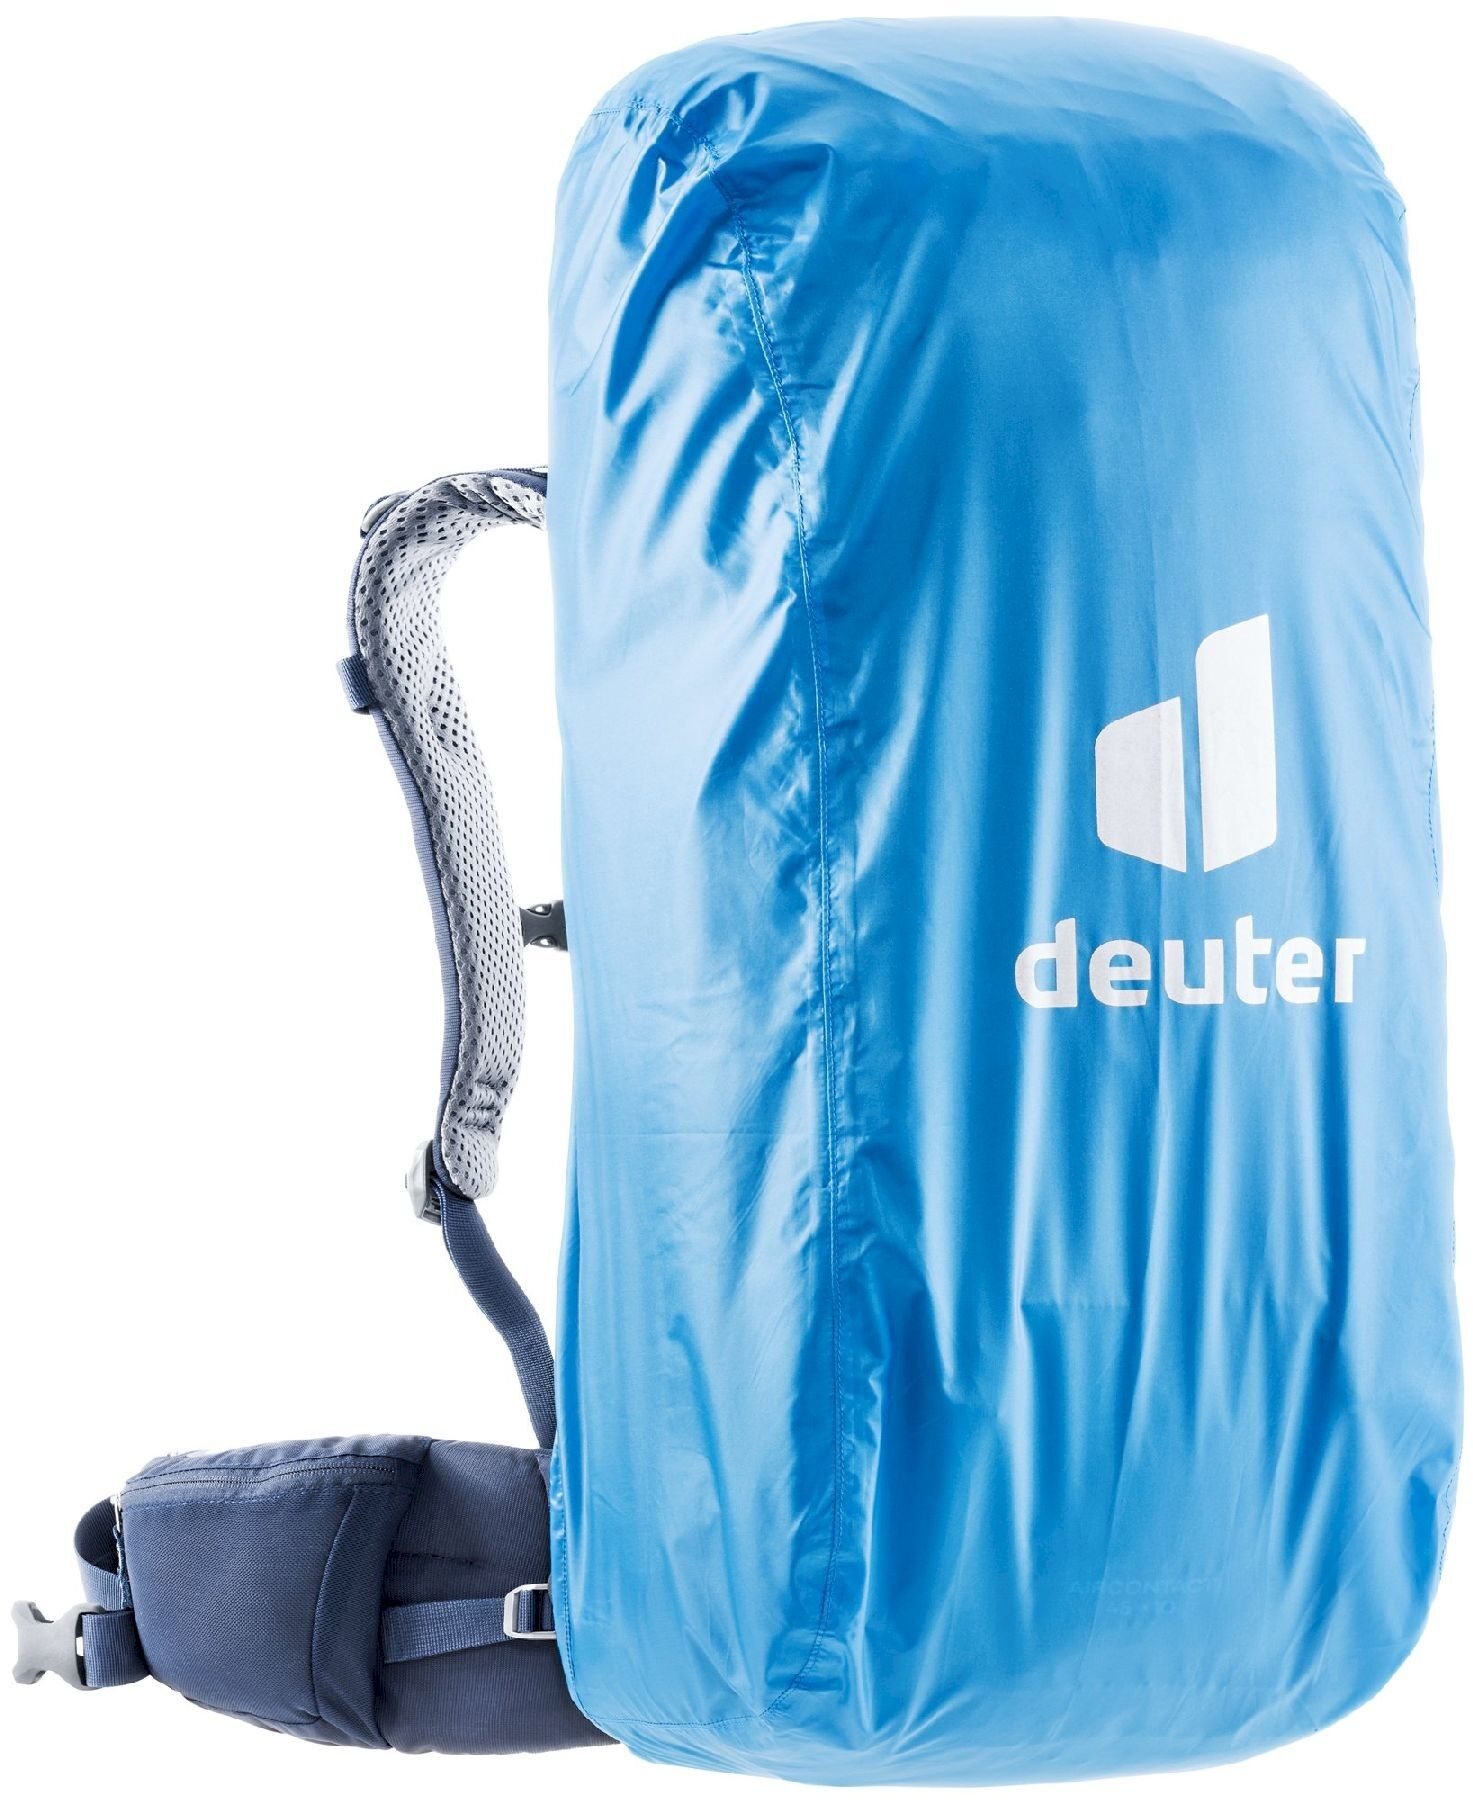 Deuter Raincover II - Protection pluie sac à dos | Hardloop